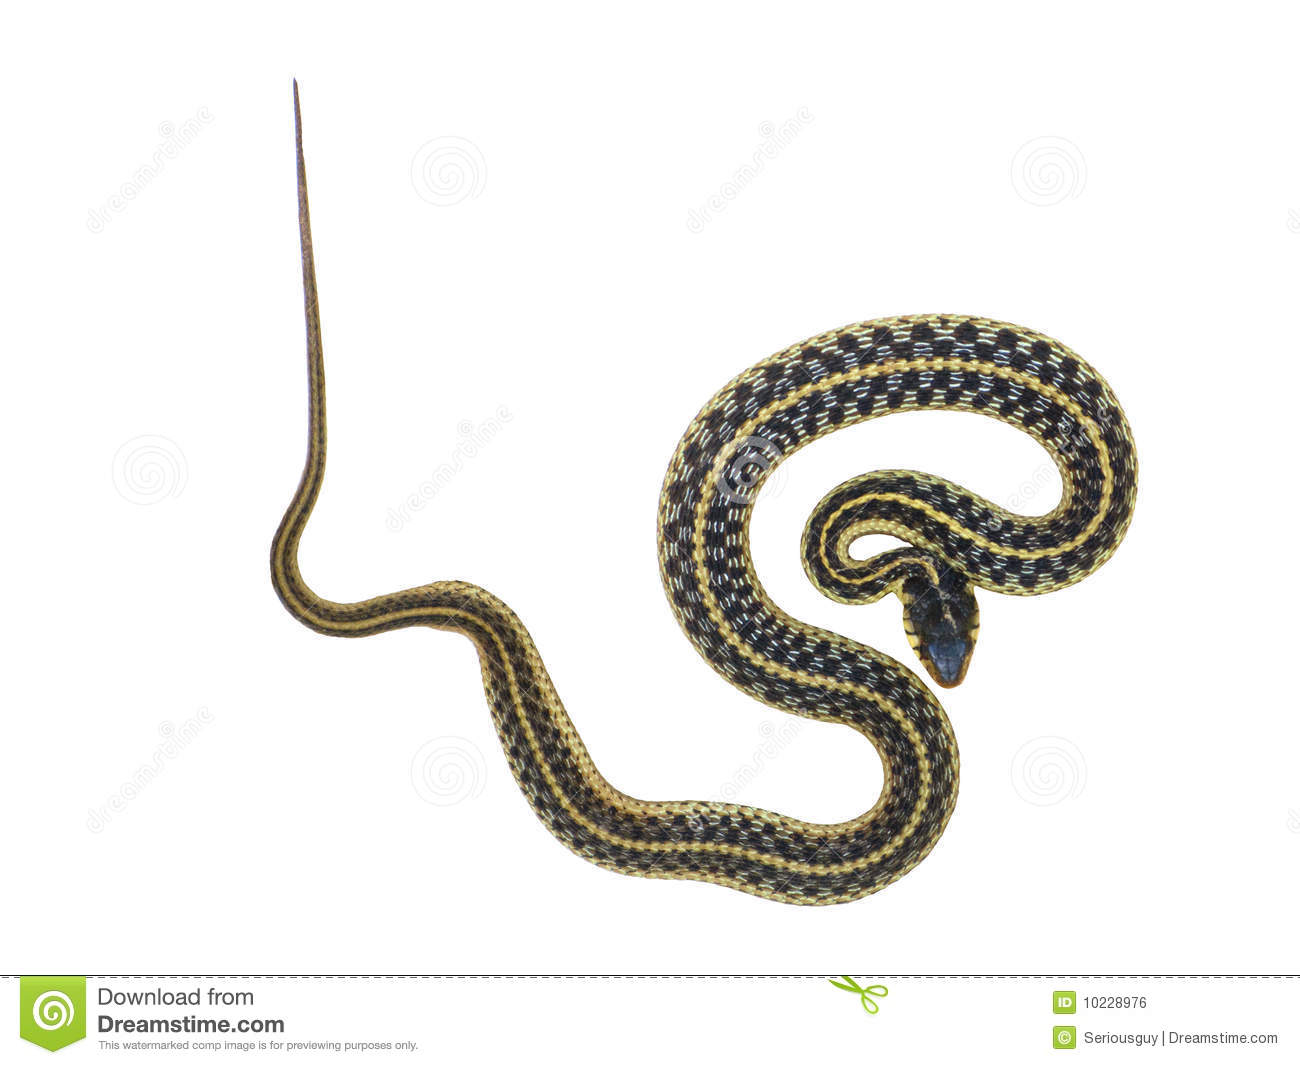 Garter Snake clipart #10, Download drawings